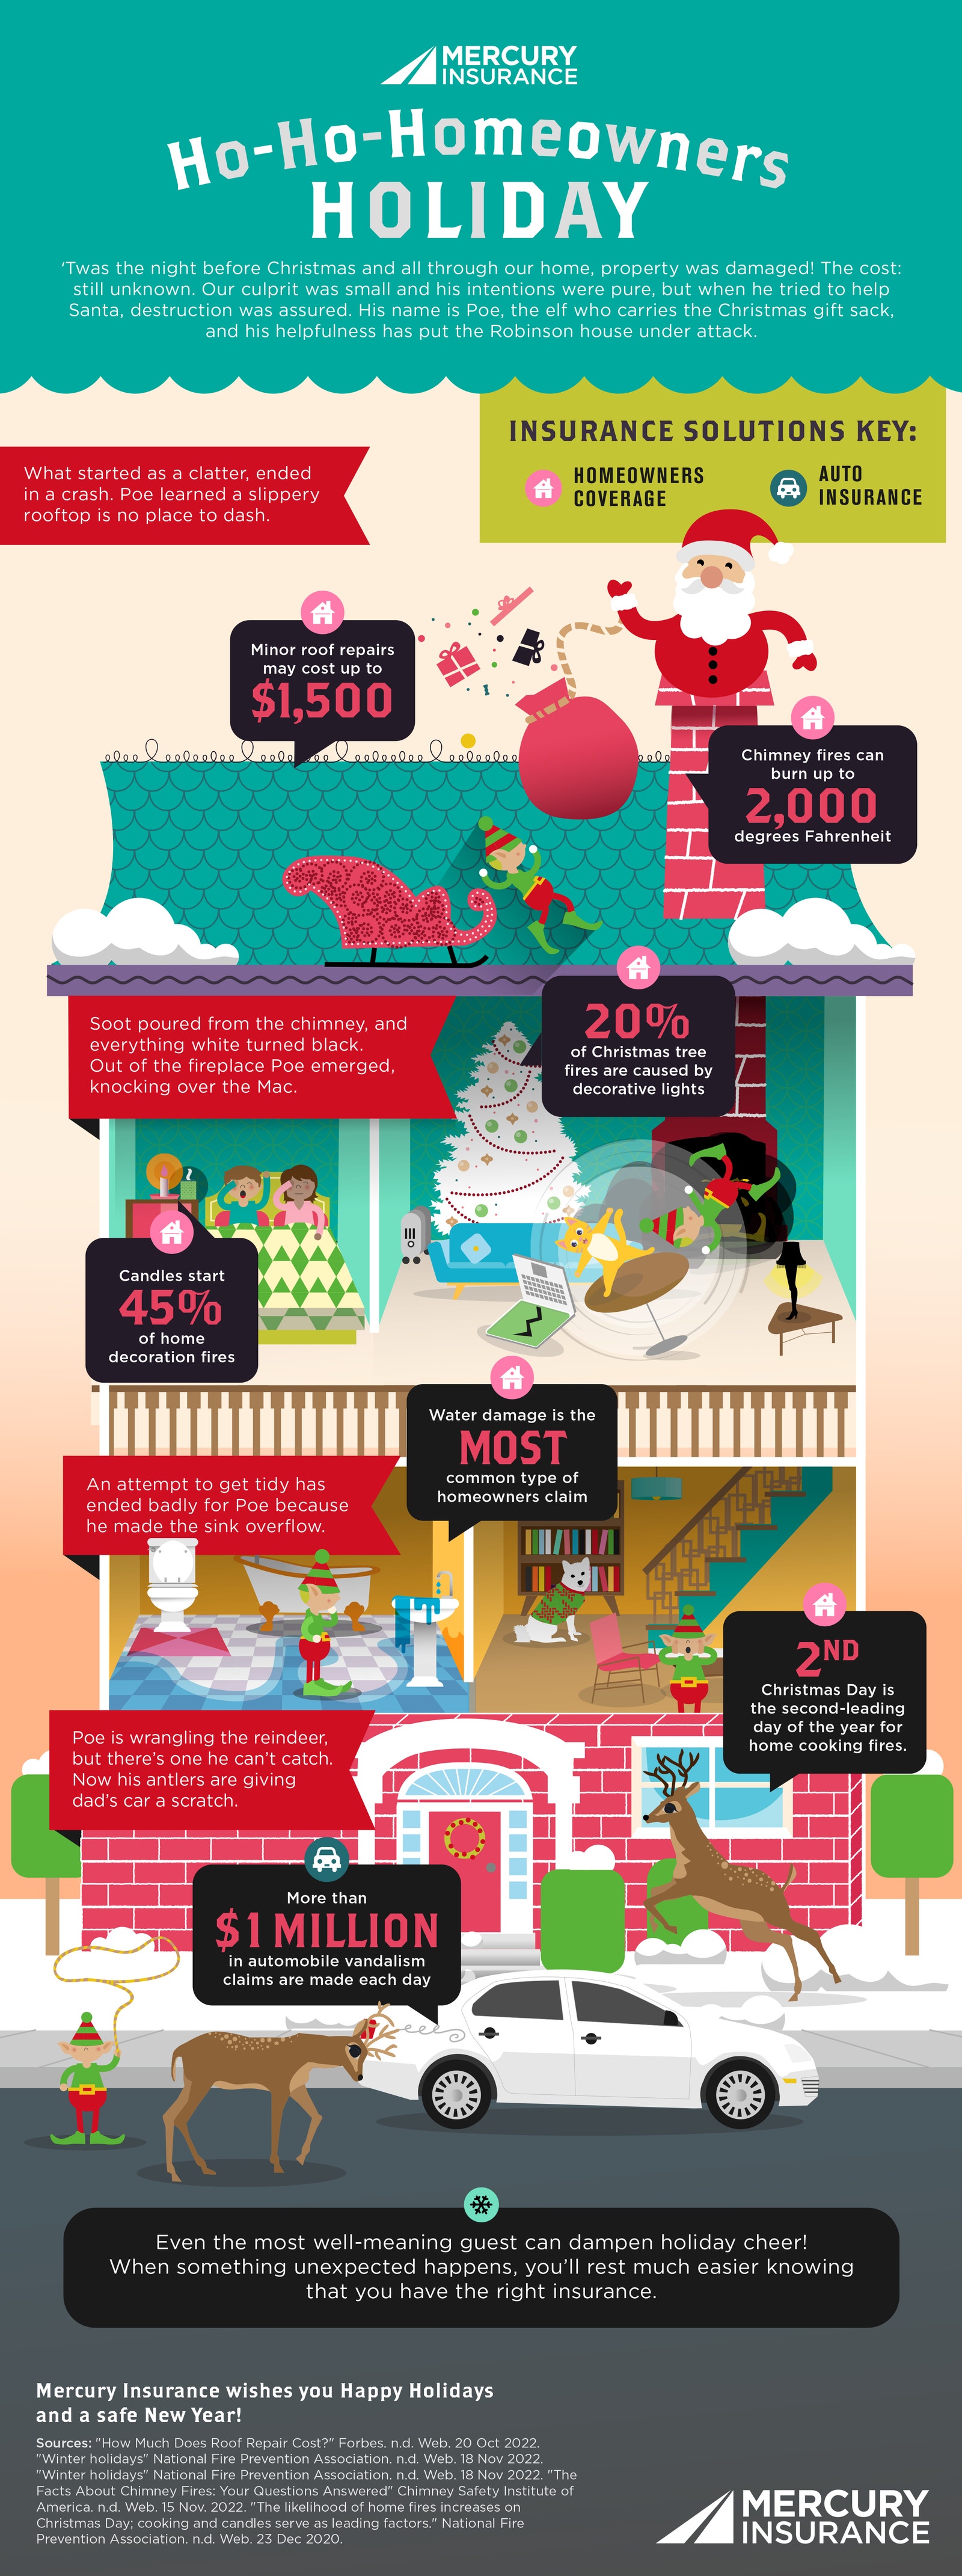 Mercury Ho-Ho-Homeowners Holiday Infographic